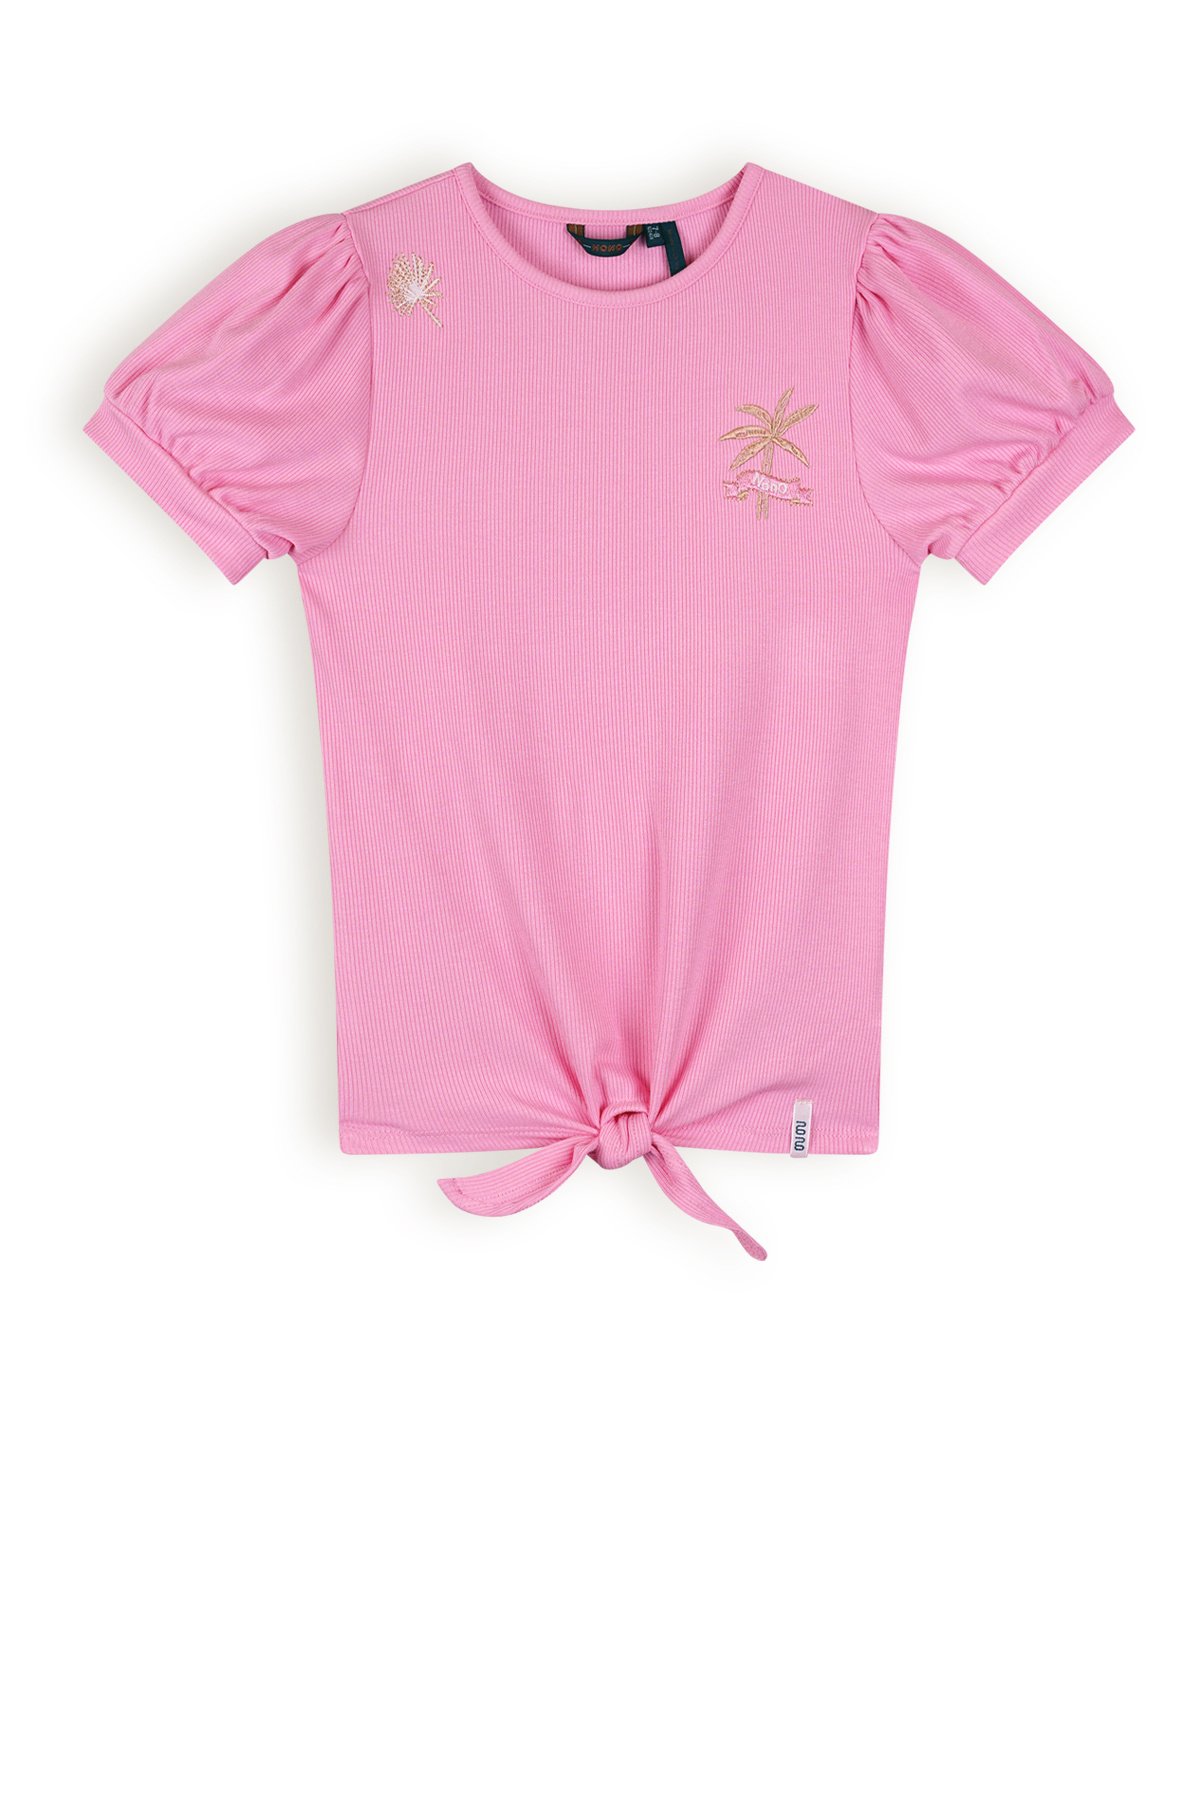 Nono N402-5405 Meisjes T-shirt - Camelia Pink - Maat 110